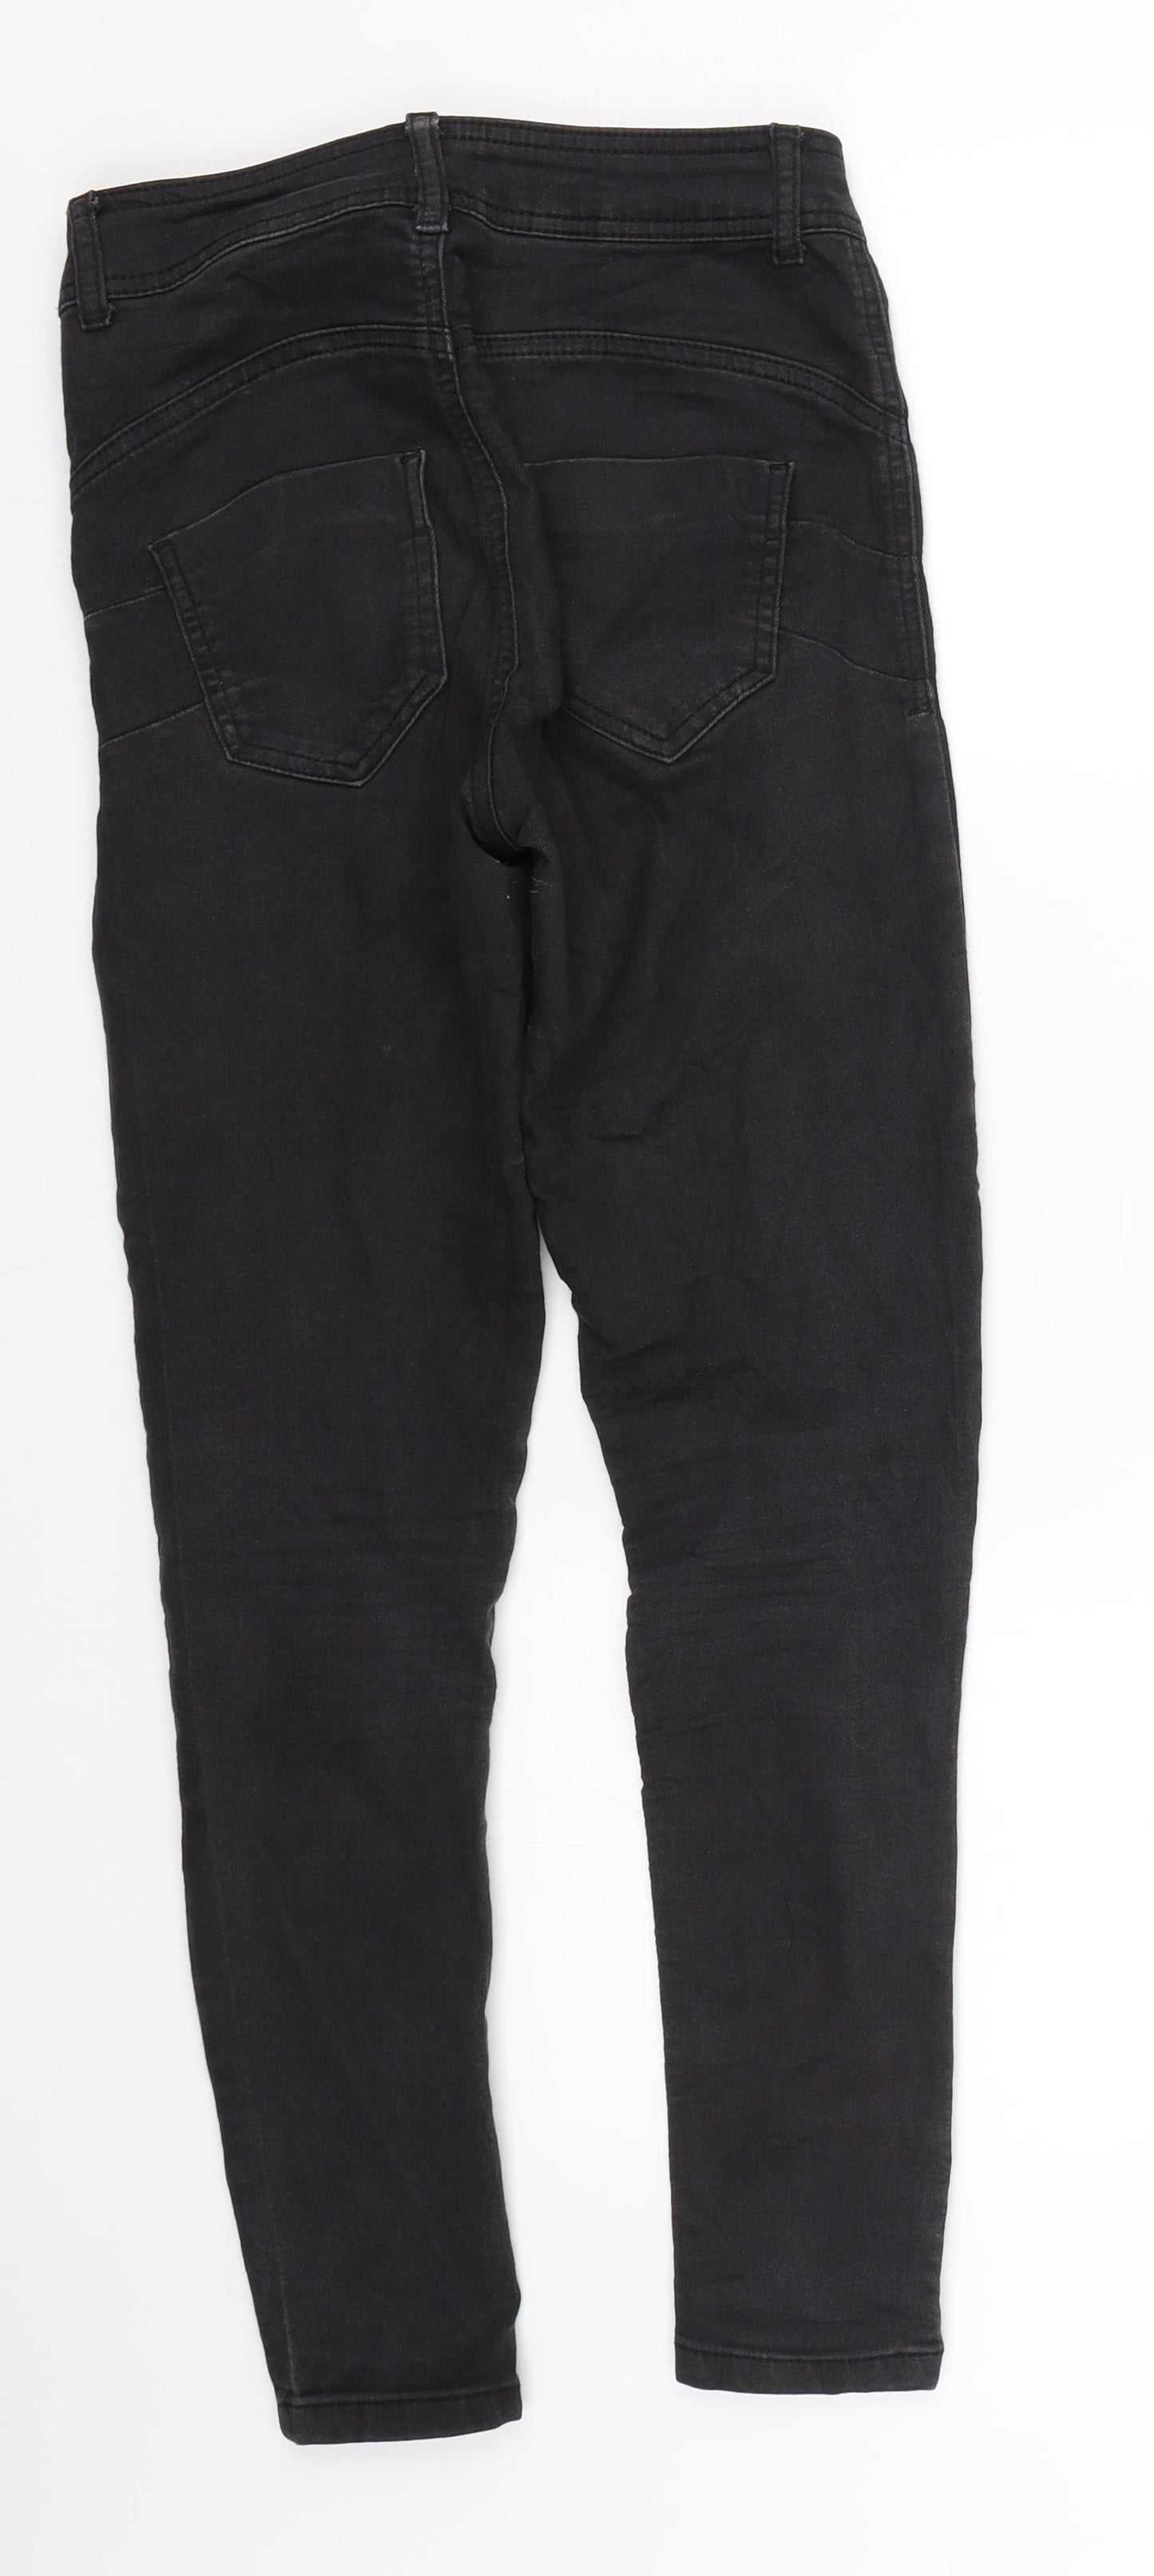 Calzedonia Womens Black  Denim Skinny Jeans Size 24 L24.5 in